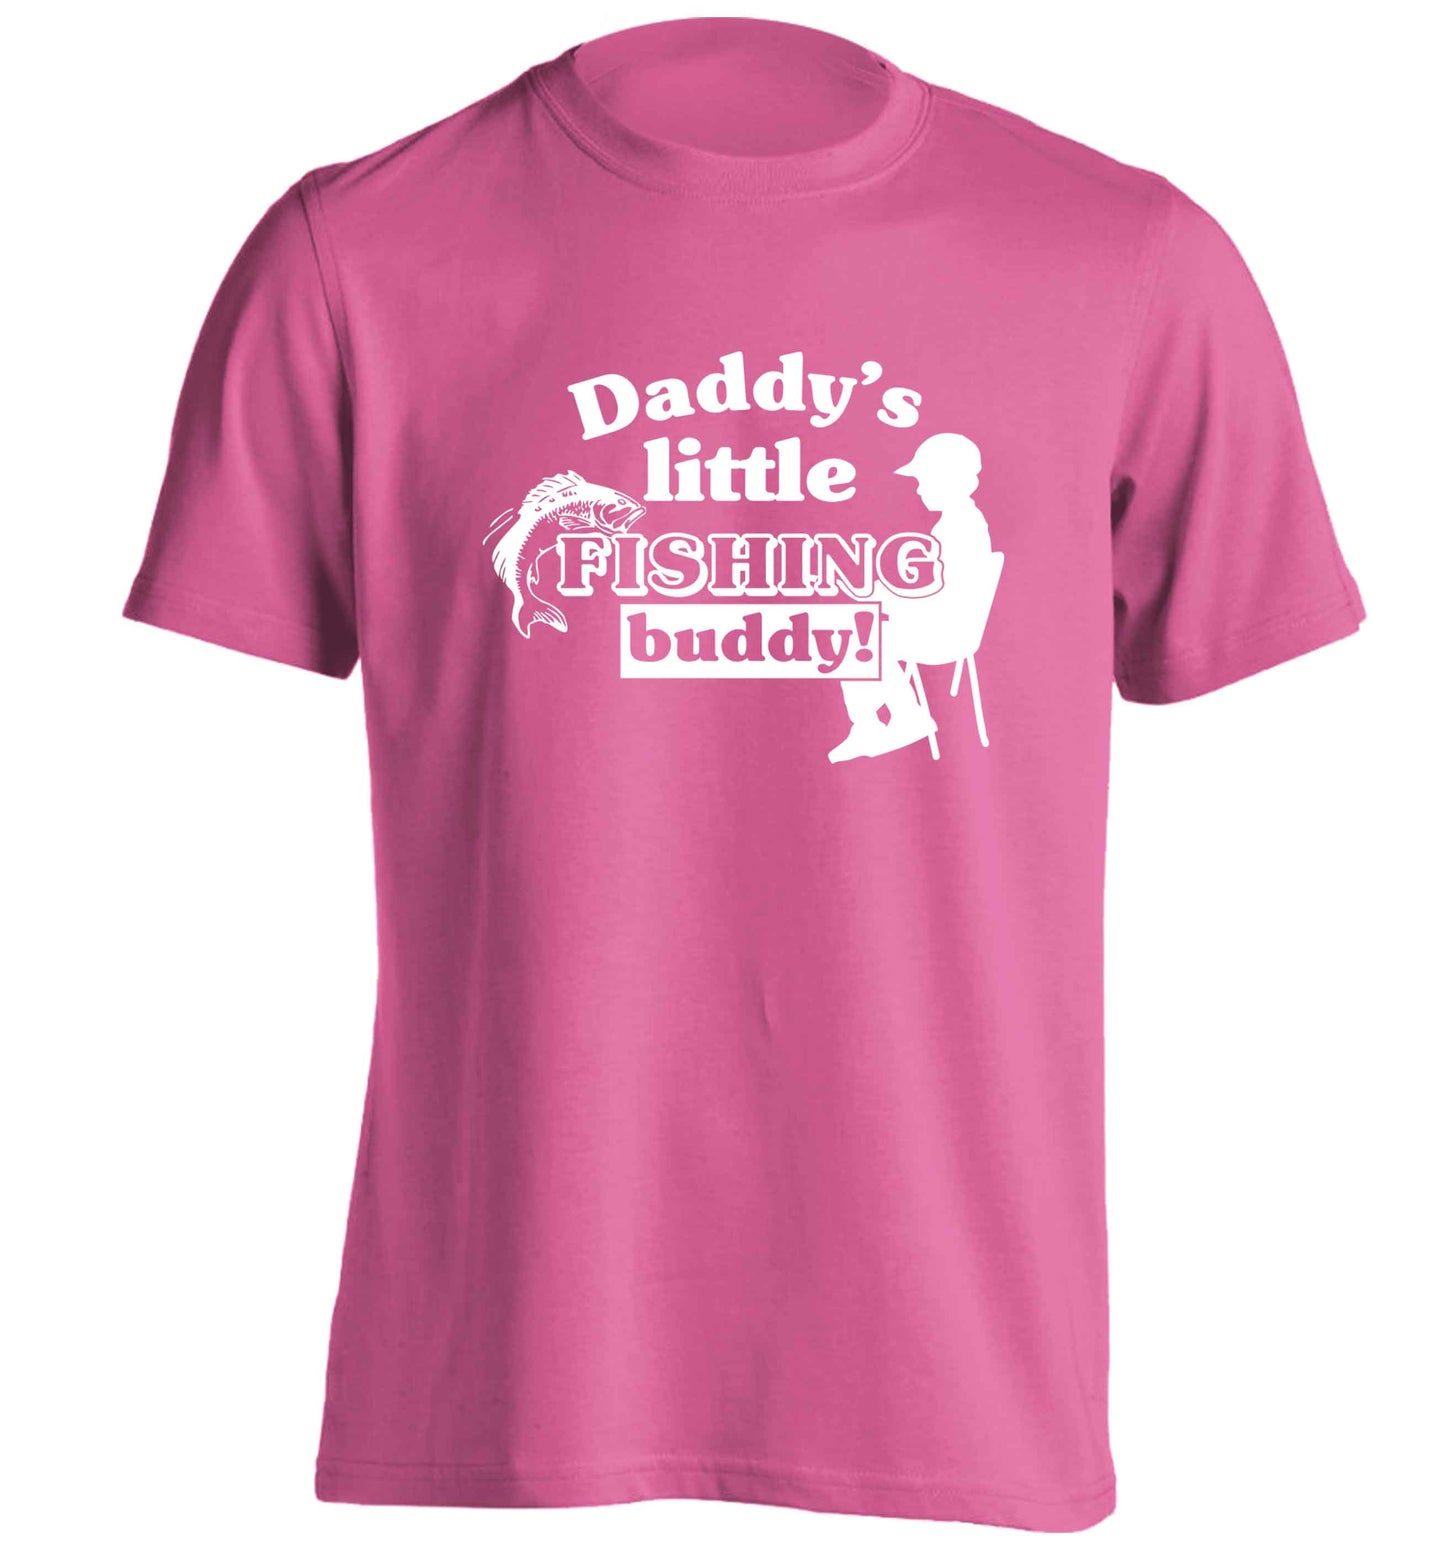 Daddy's little fishing buddy adults unisex pink Tshirt 2XL